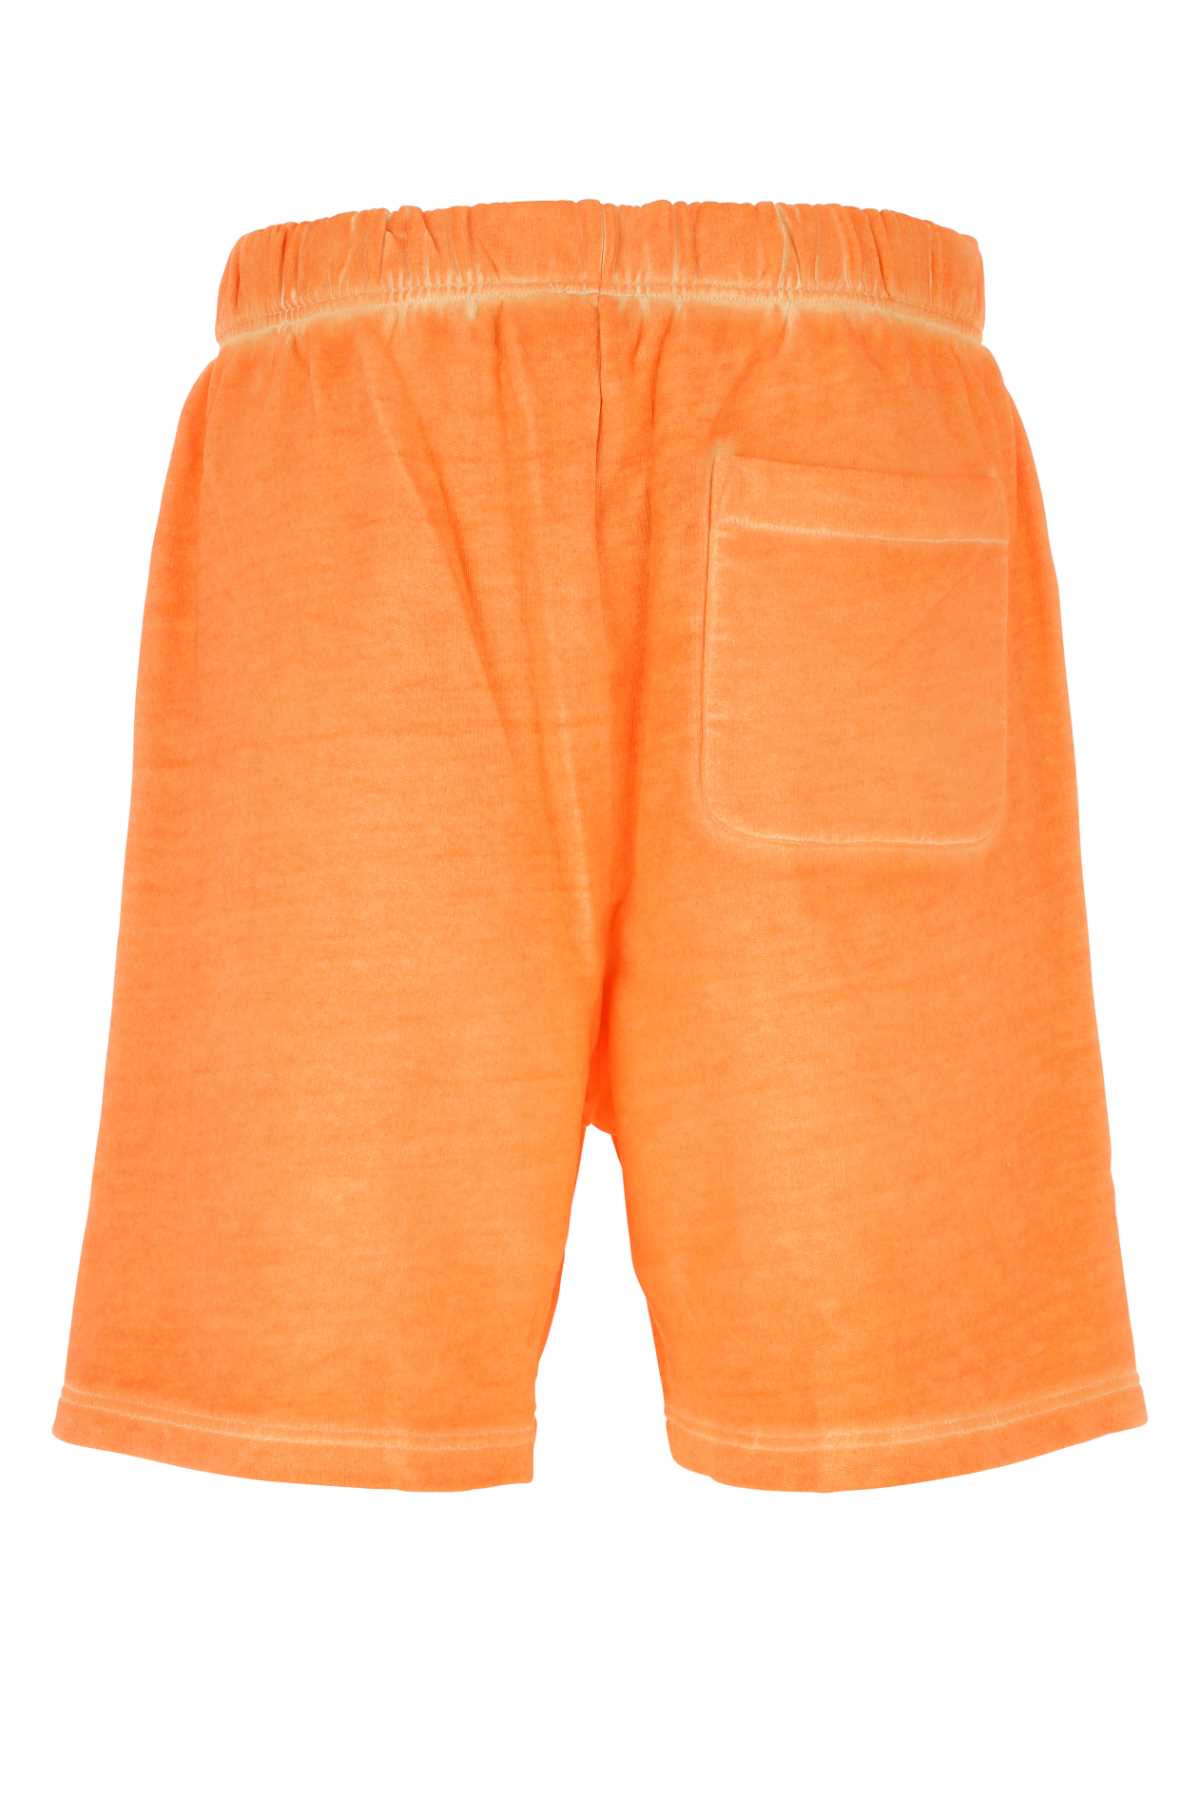 Marcelo Burlon County Of Milan Orange Cotton Bermuda Shorts In Orangered